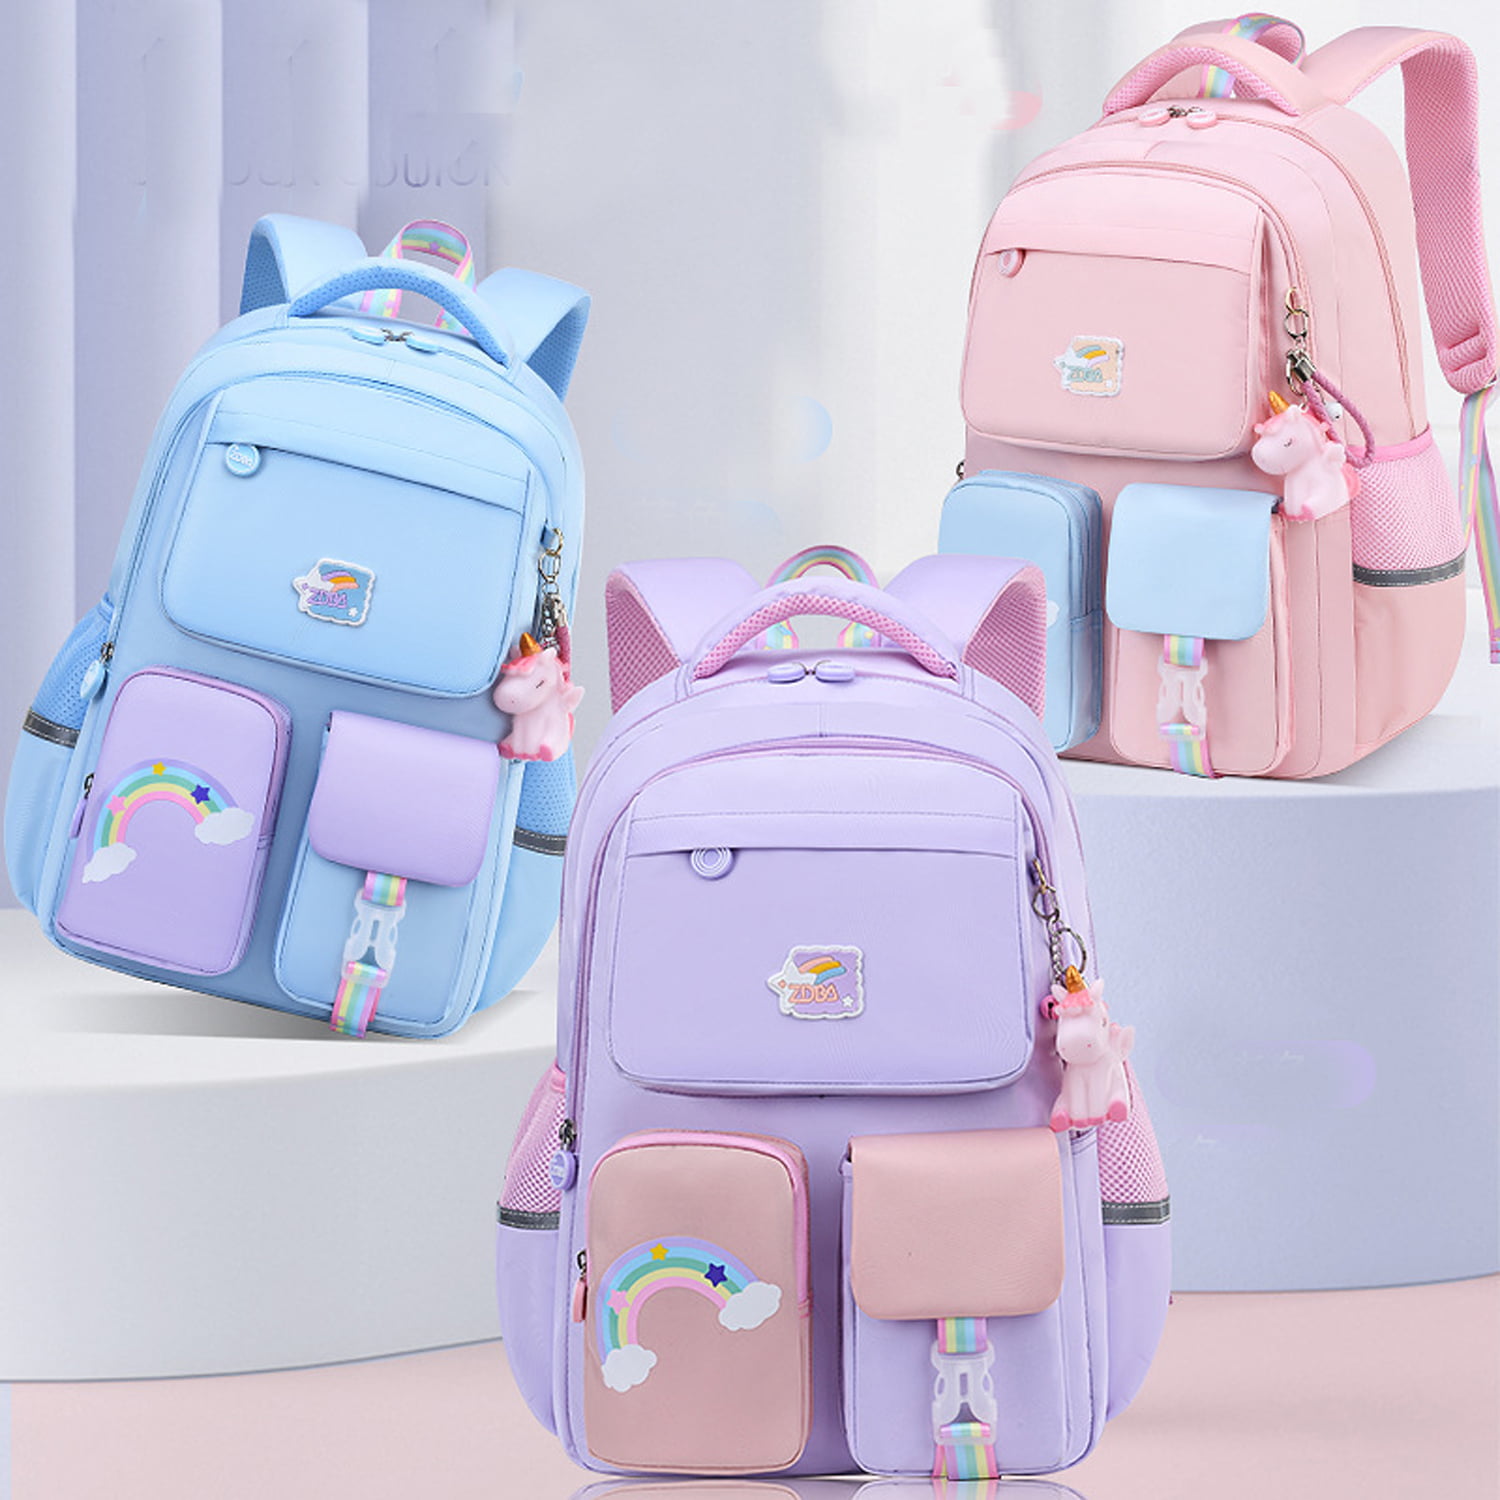 Buy Alison 20 Liter |Girls college bag | Girls school bag | Girls Tution bag  | Girls backpack Waterproof School Bag (Green) at Amazon.in